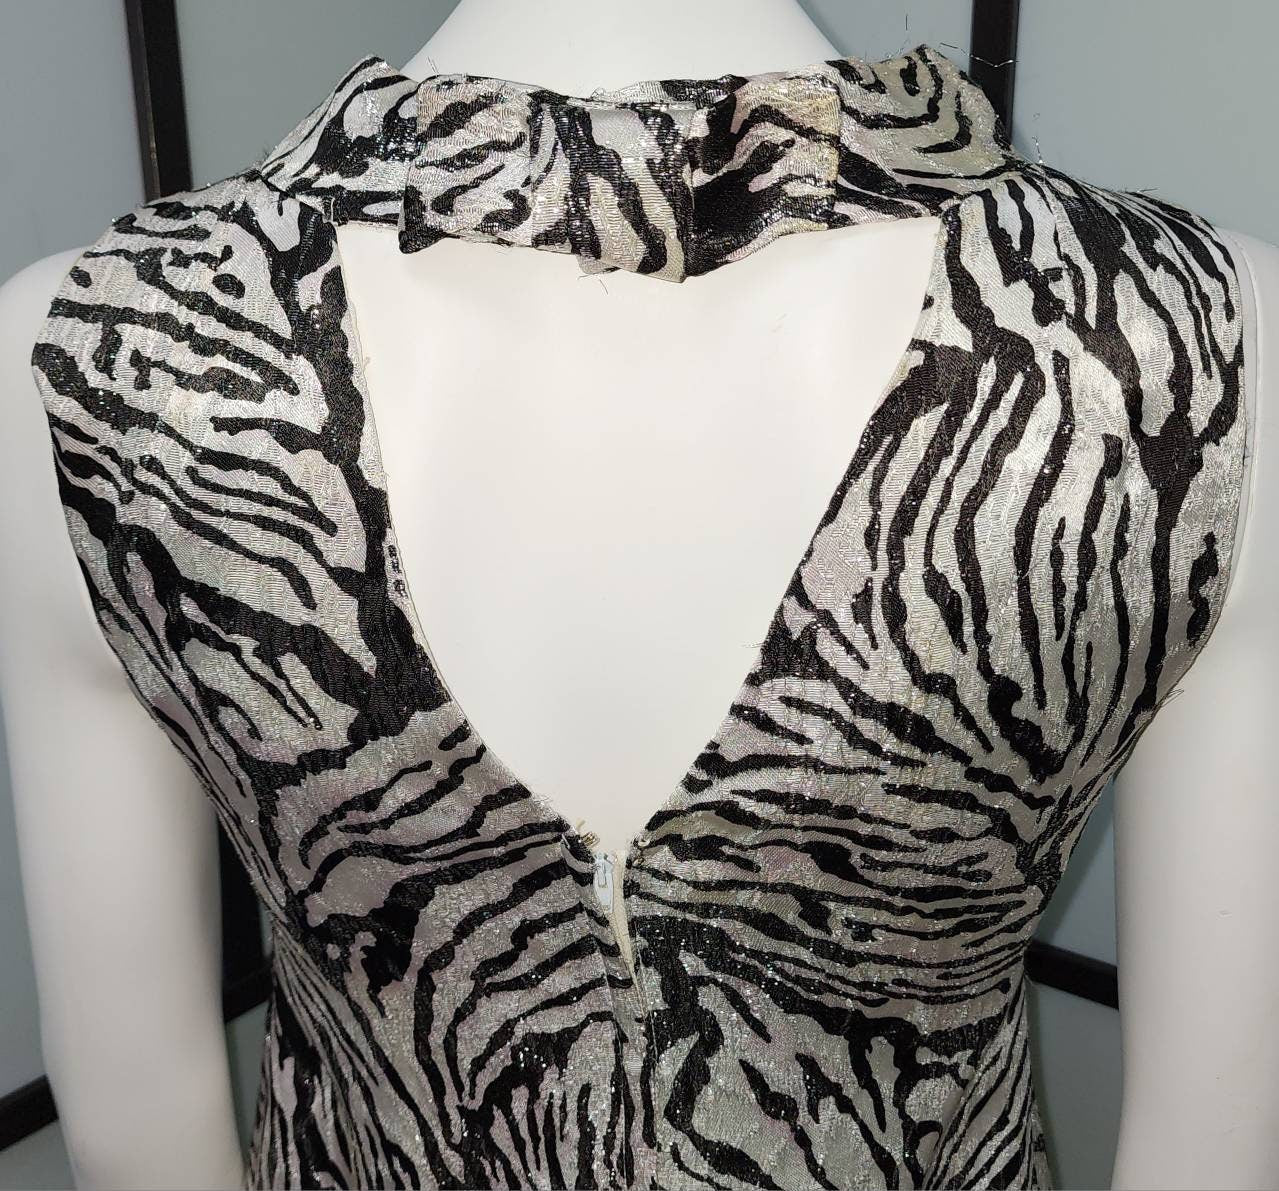 Vintage Metallic Dress 1960s Silver Black Tiger Stripe Glitter Metallic Dress Open Back Trude Jr. California Mod Go Go S